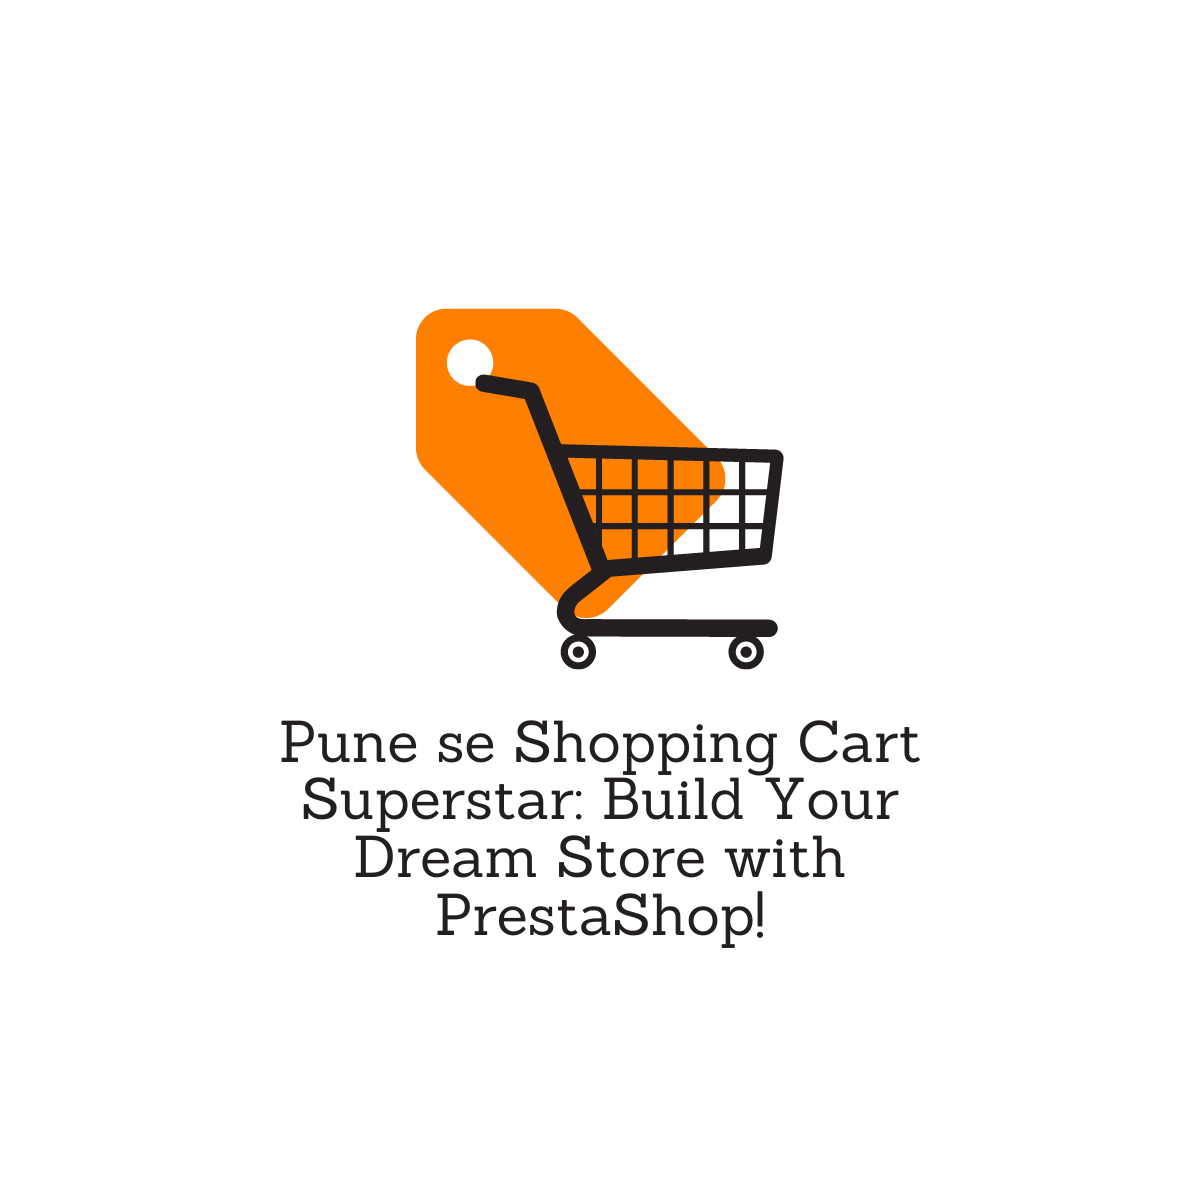 Pune se Shopping Cart Superstar: Build Your Dream Store with PrestaShop!